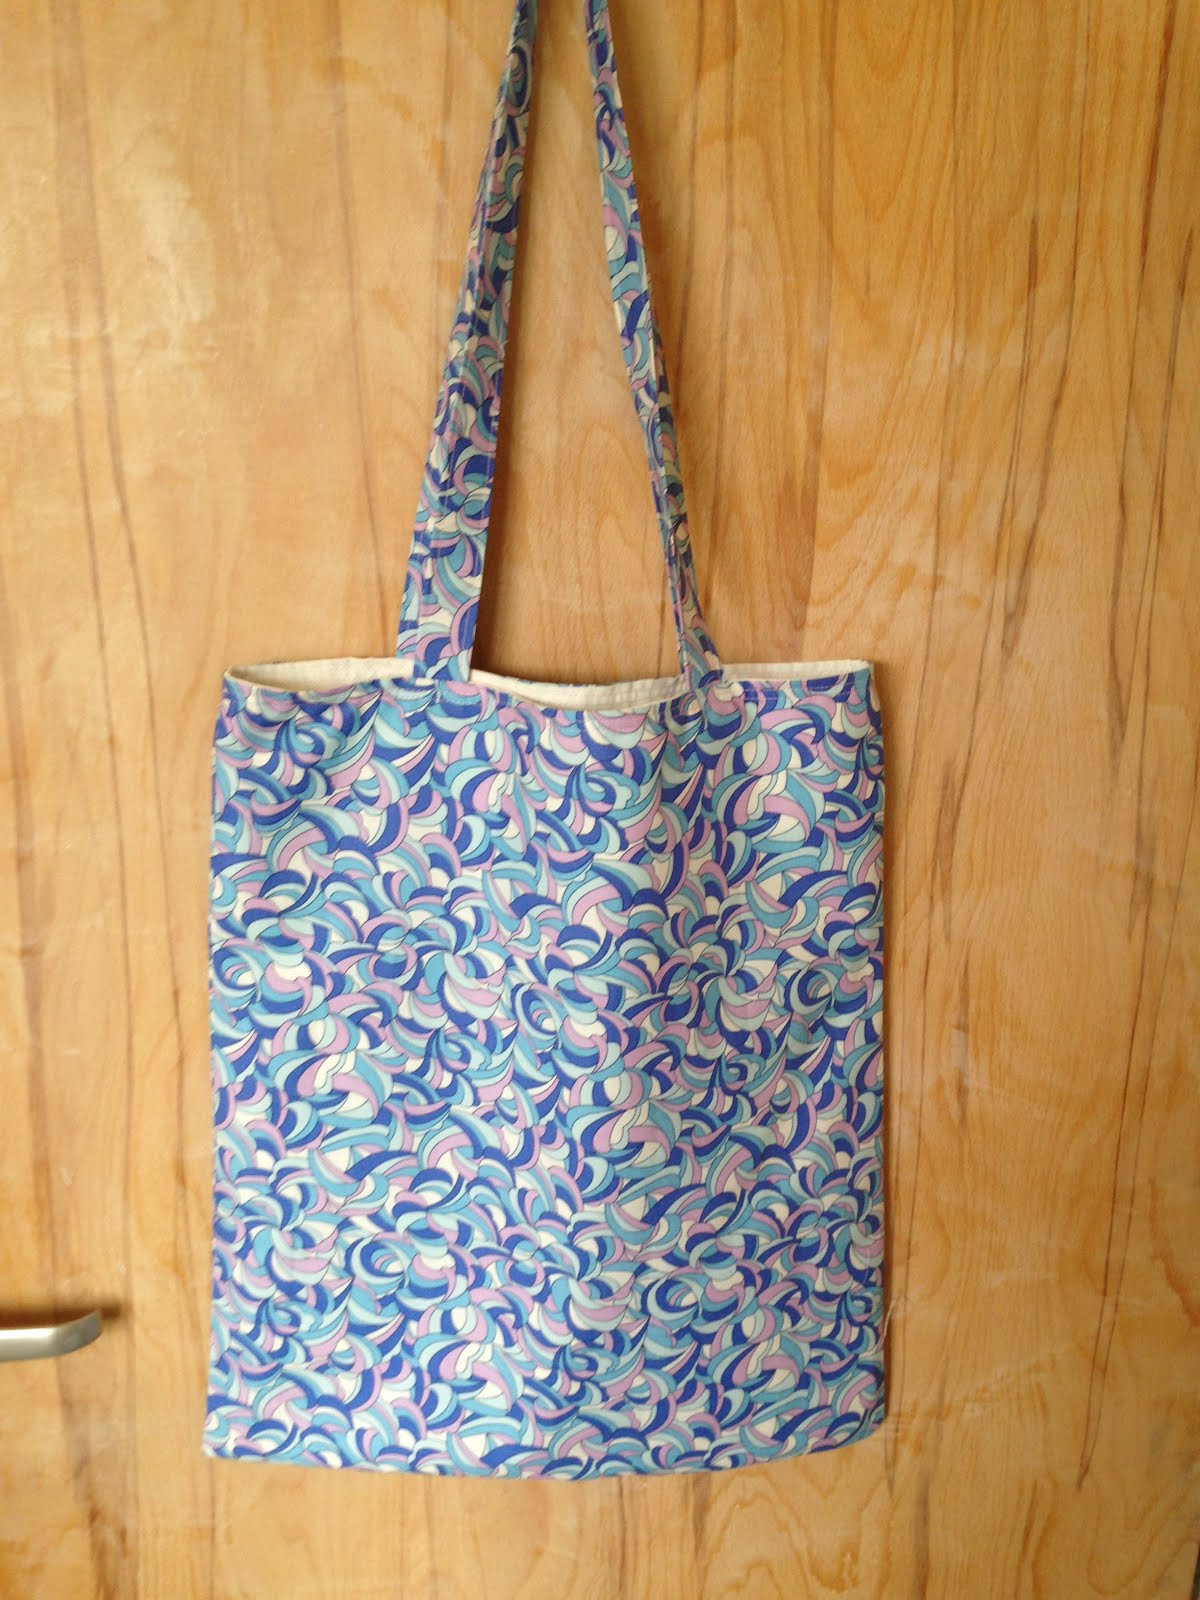 Handmade shopping tote bag